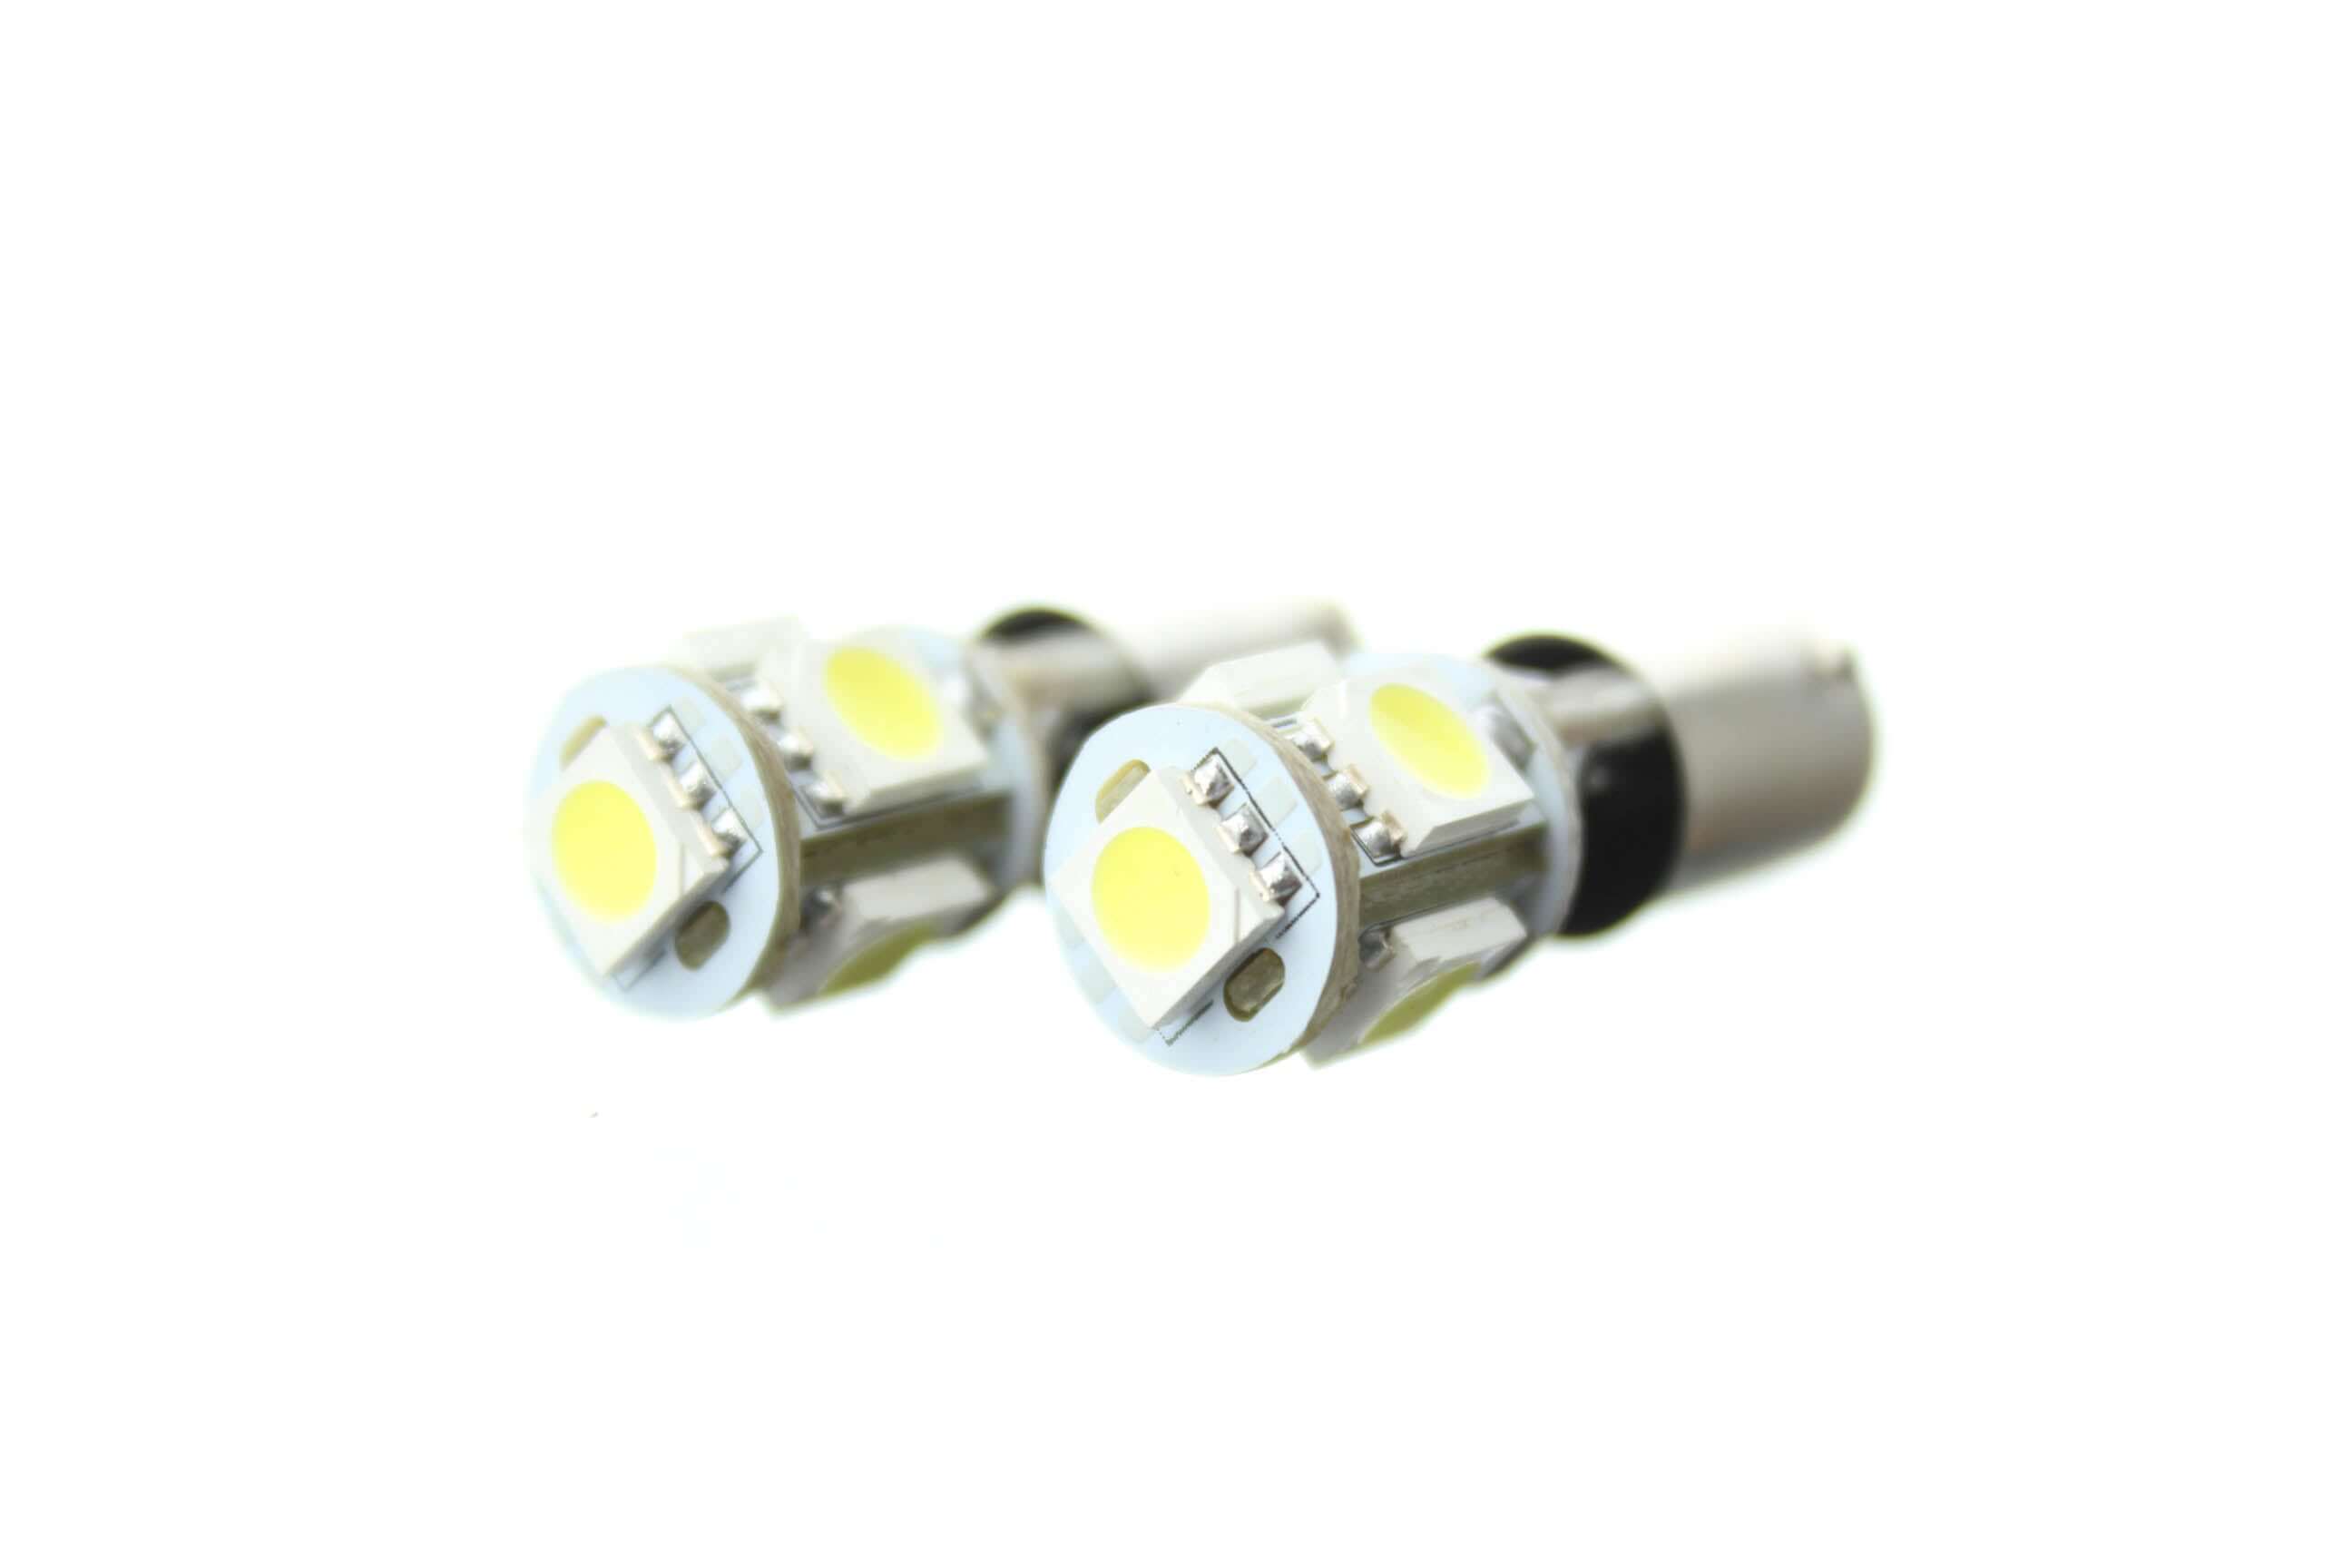 BAX9S (H6W) - SMD LED bulbs - White